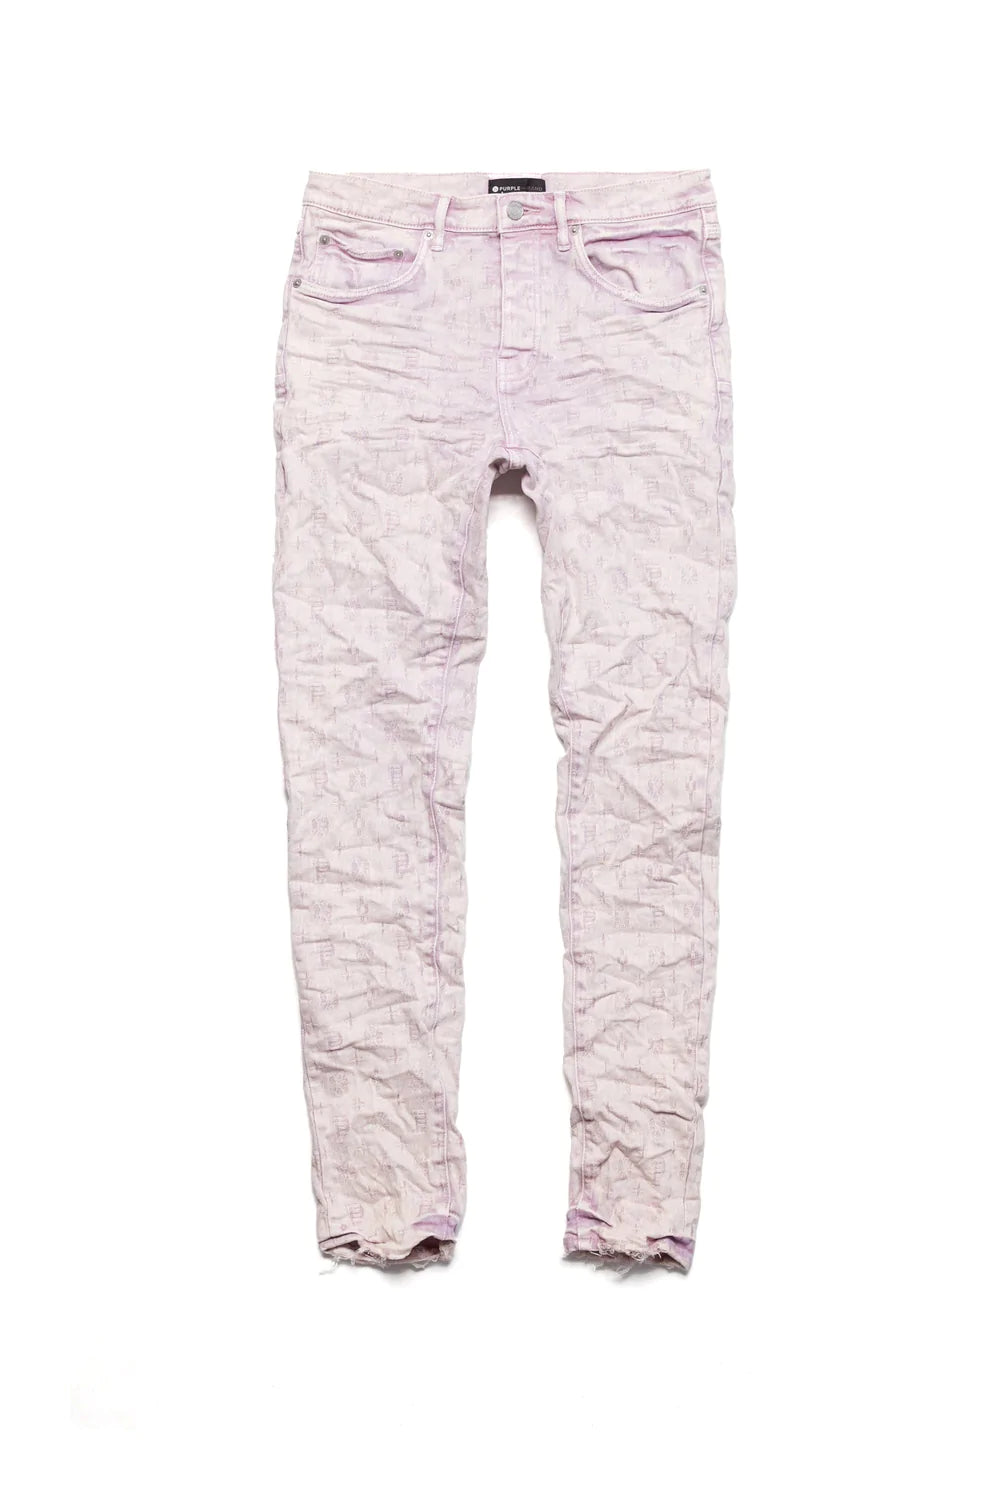 Purple Brand P001 Low Rise Skinny Jeans